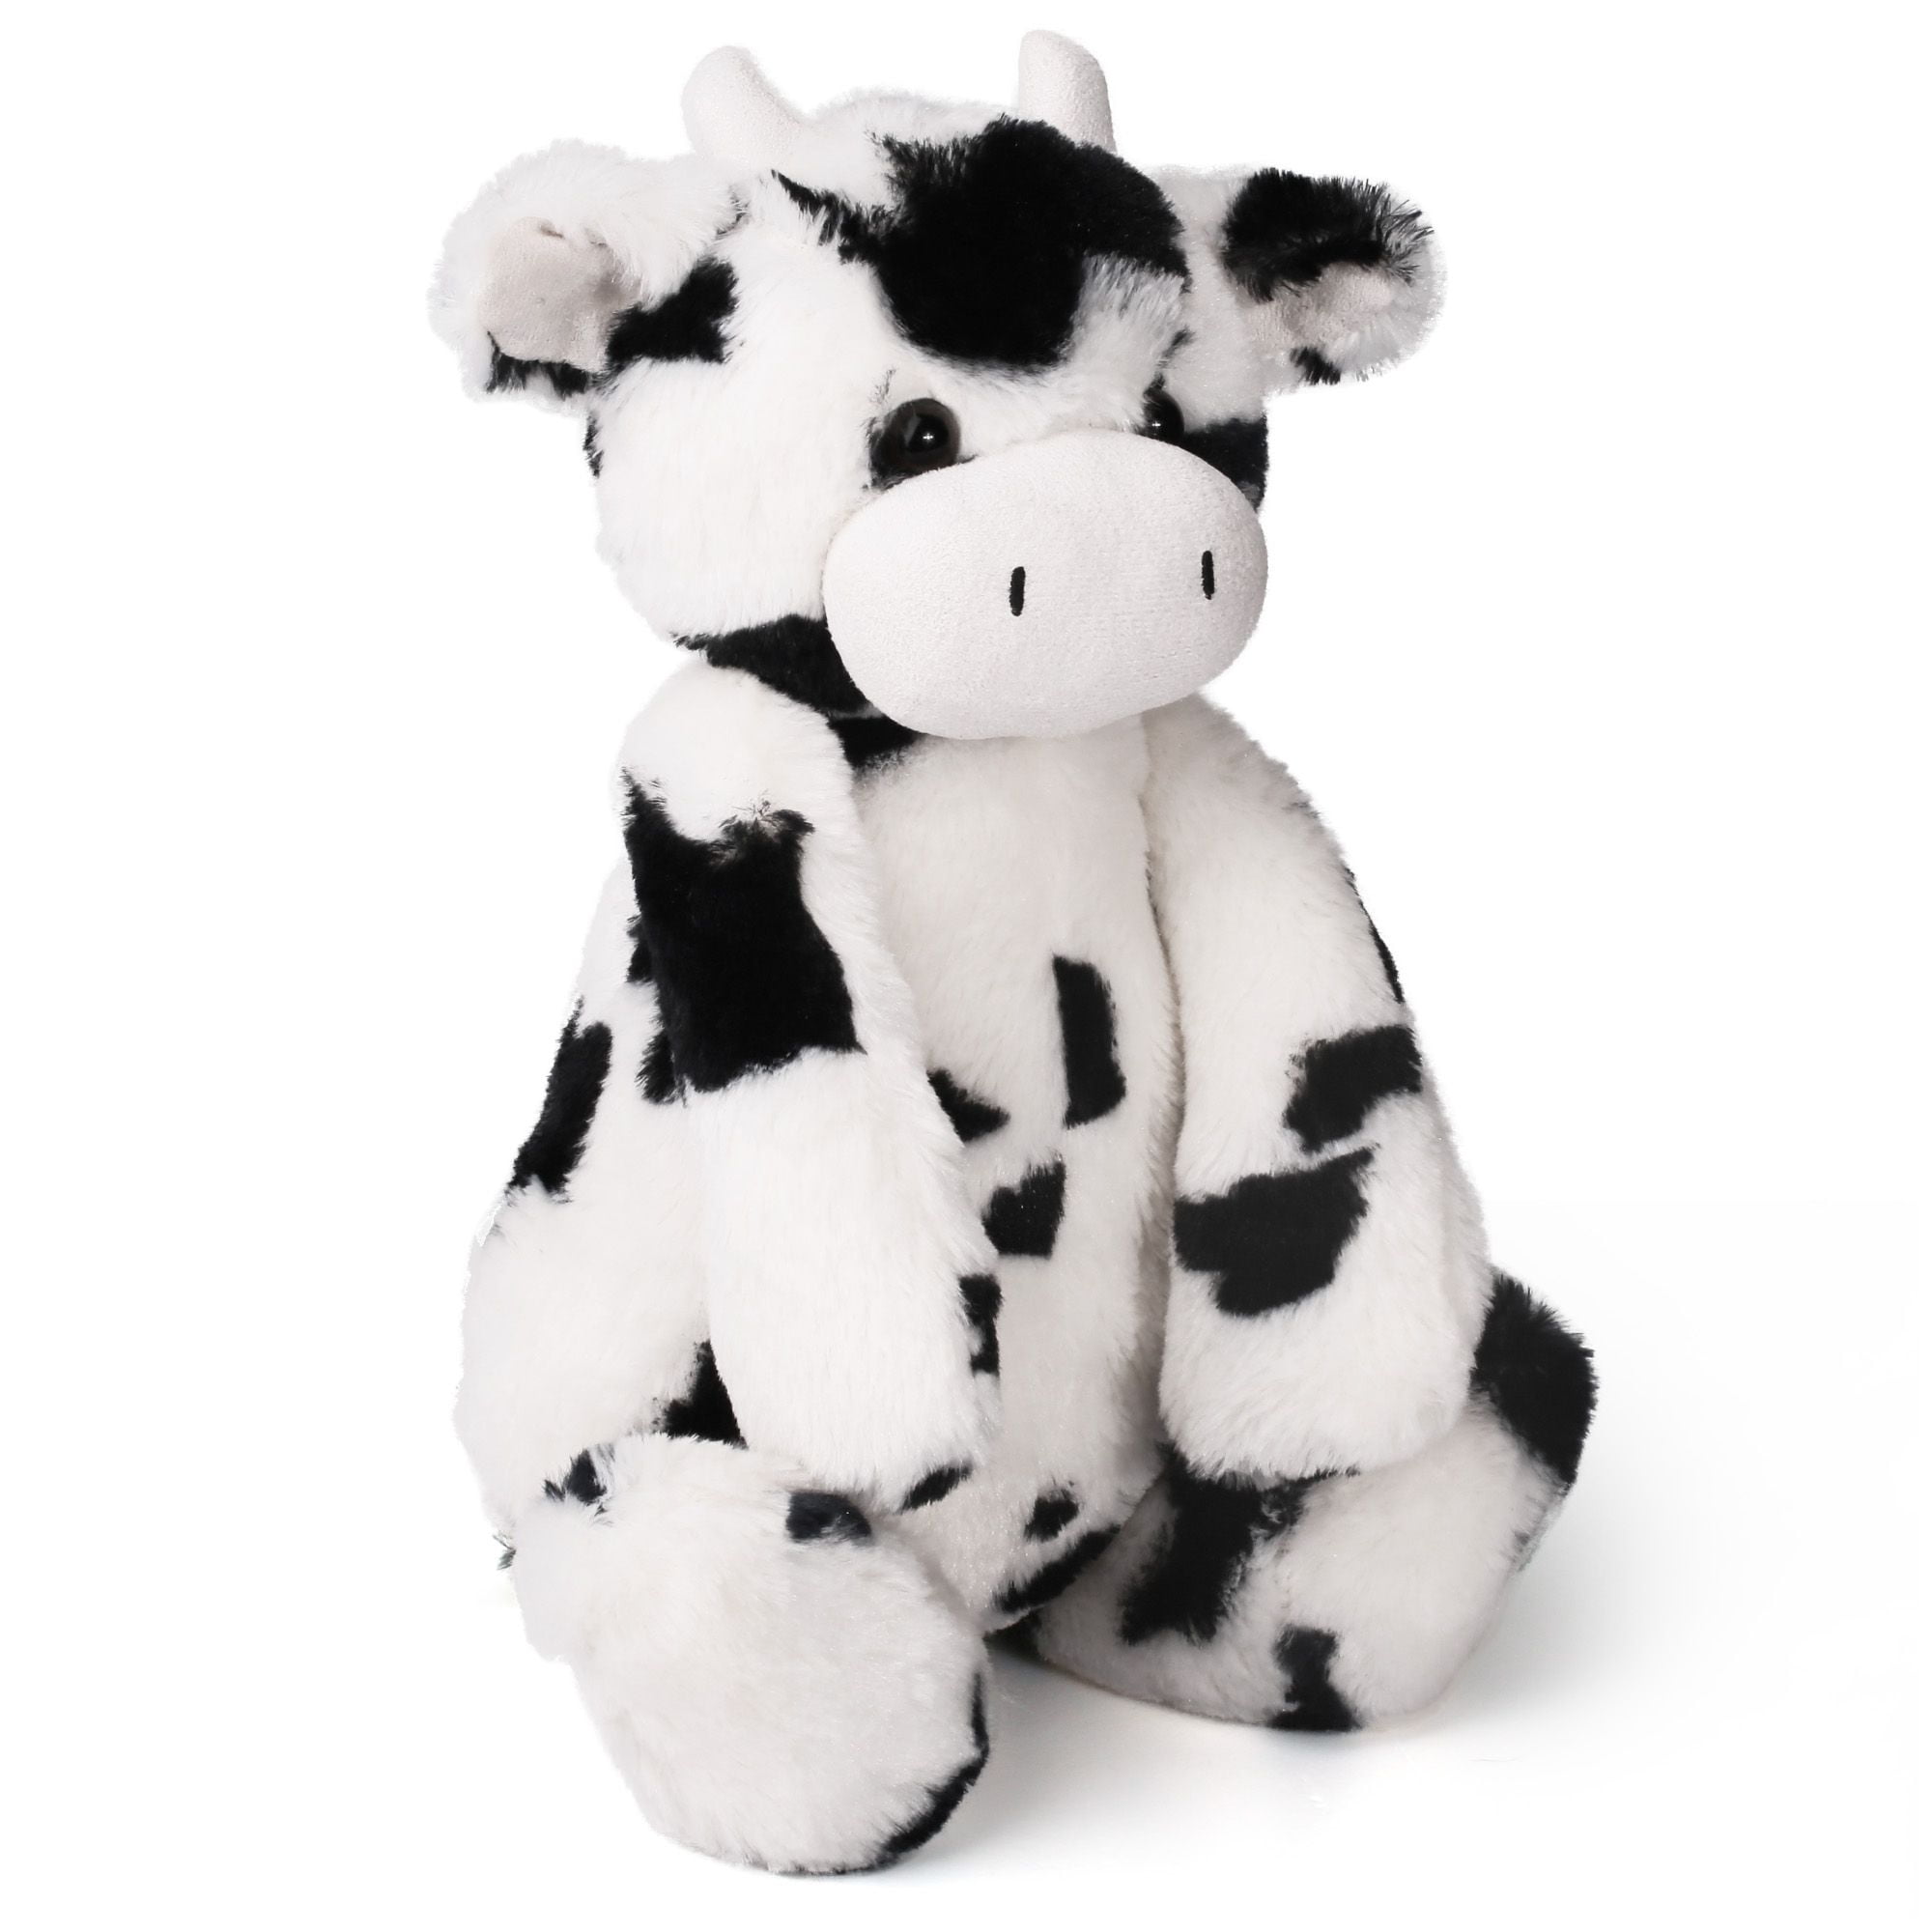 Douglas Plush Stuffed Farm Animal Sweet Cream Calf Cow 9i Cuddle Toy Black White for sale online 